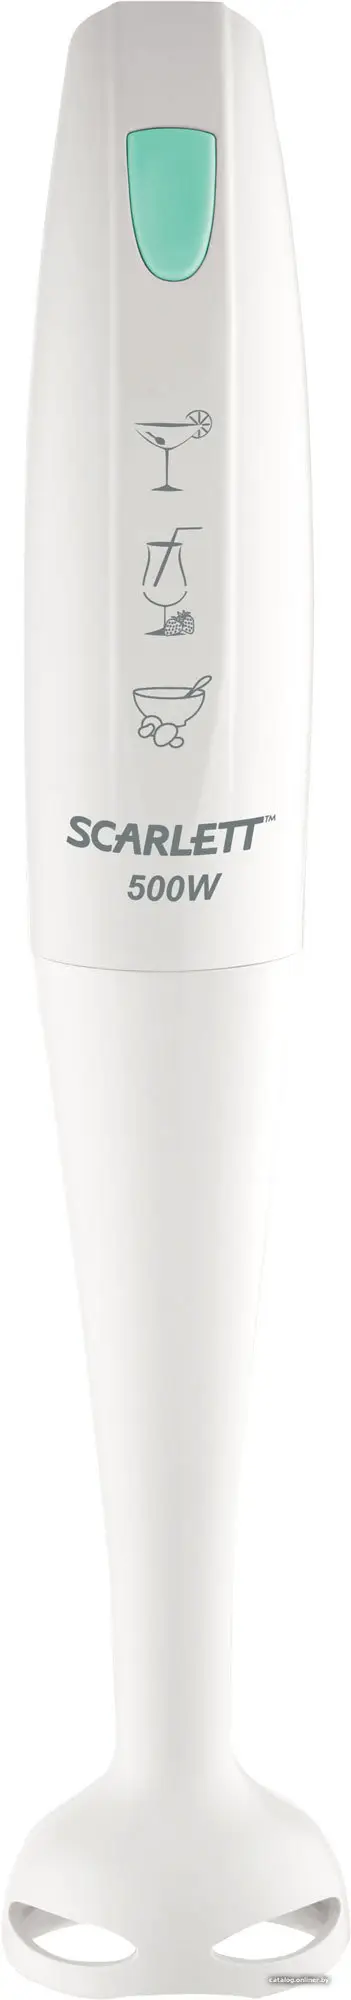 Купить Блендер SCARLETT SC-HB42S08 White, цена, опт и розница